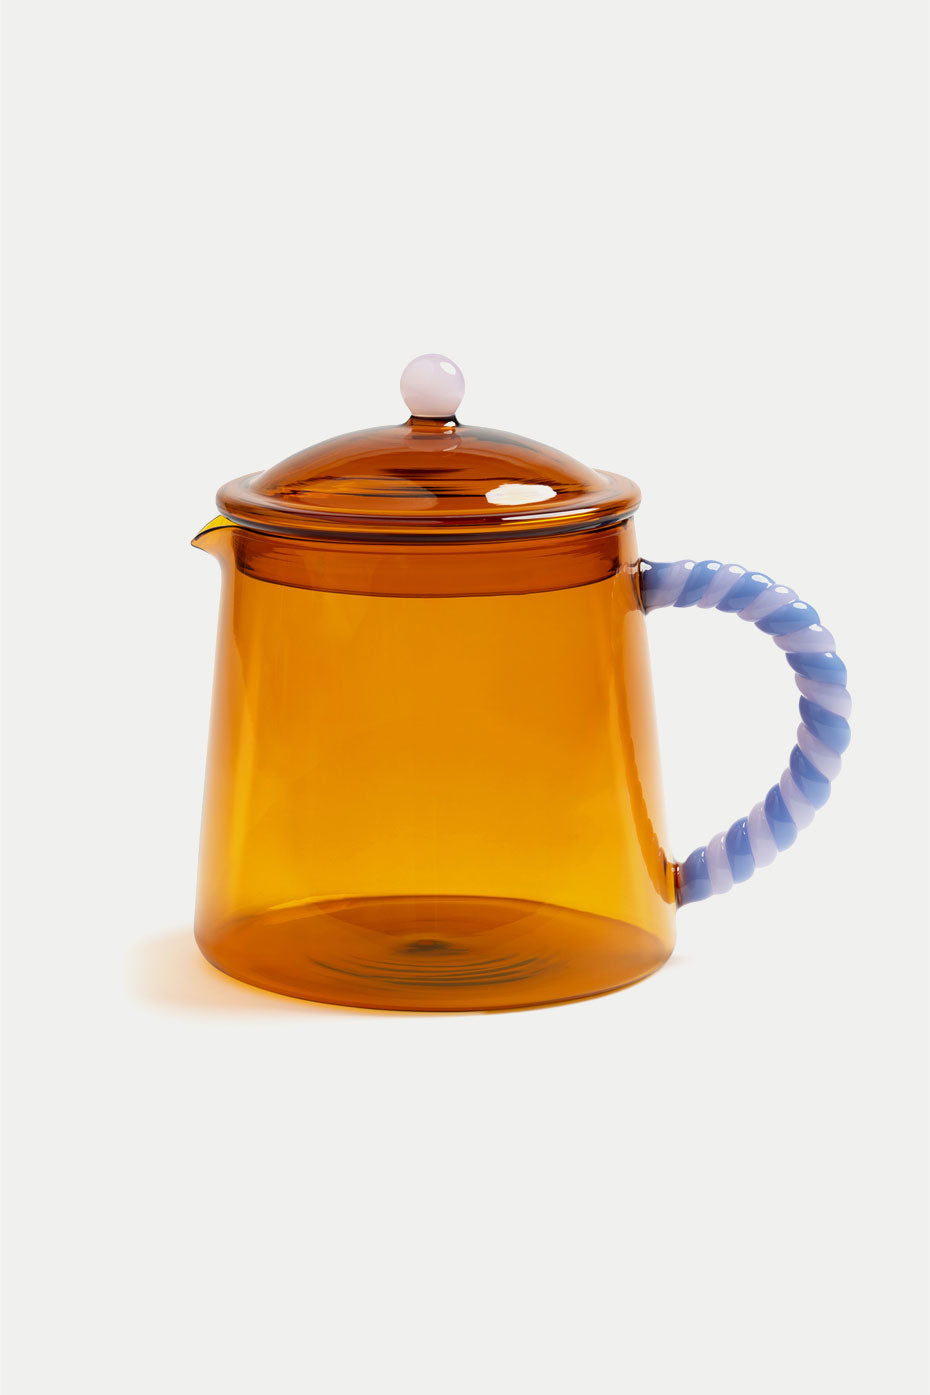 andklevering-amber-duet-teapot